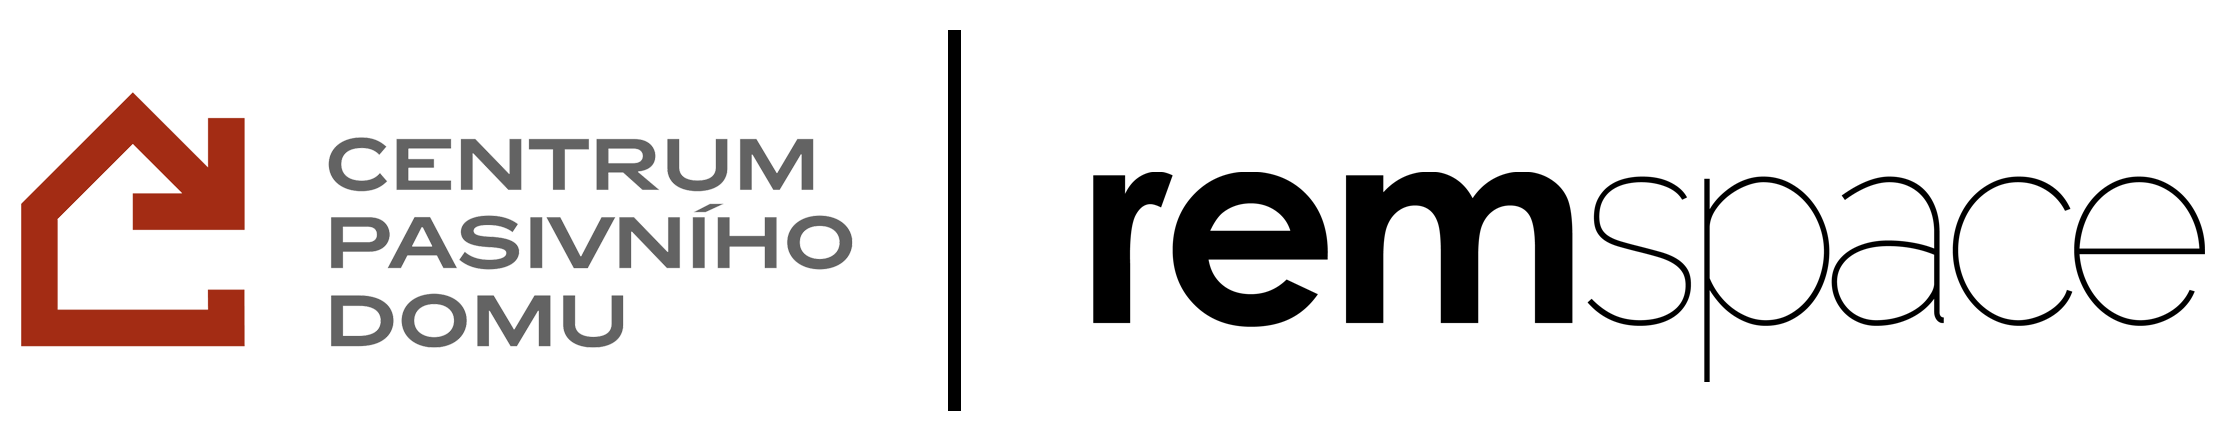 REM SPACE logo